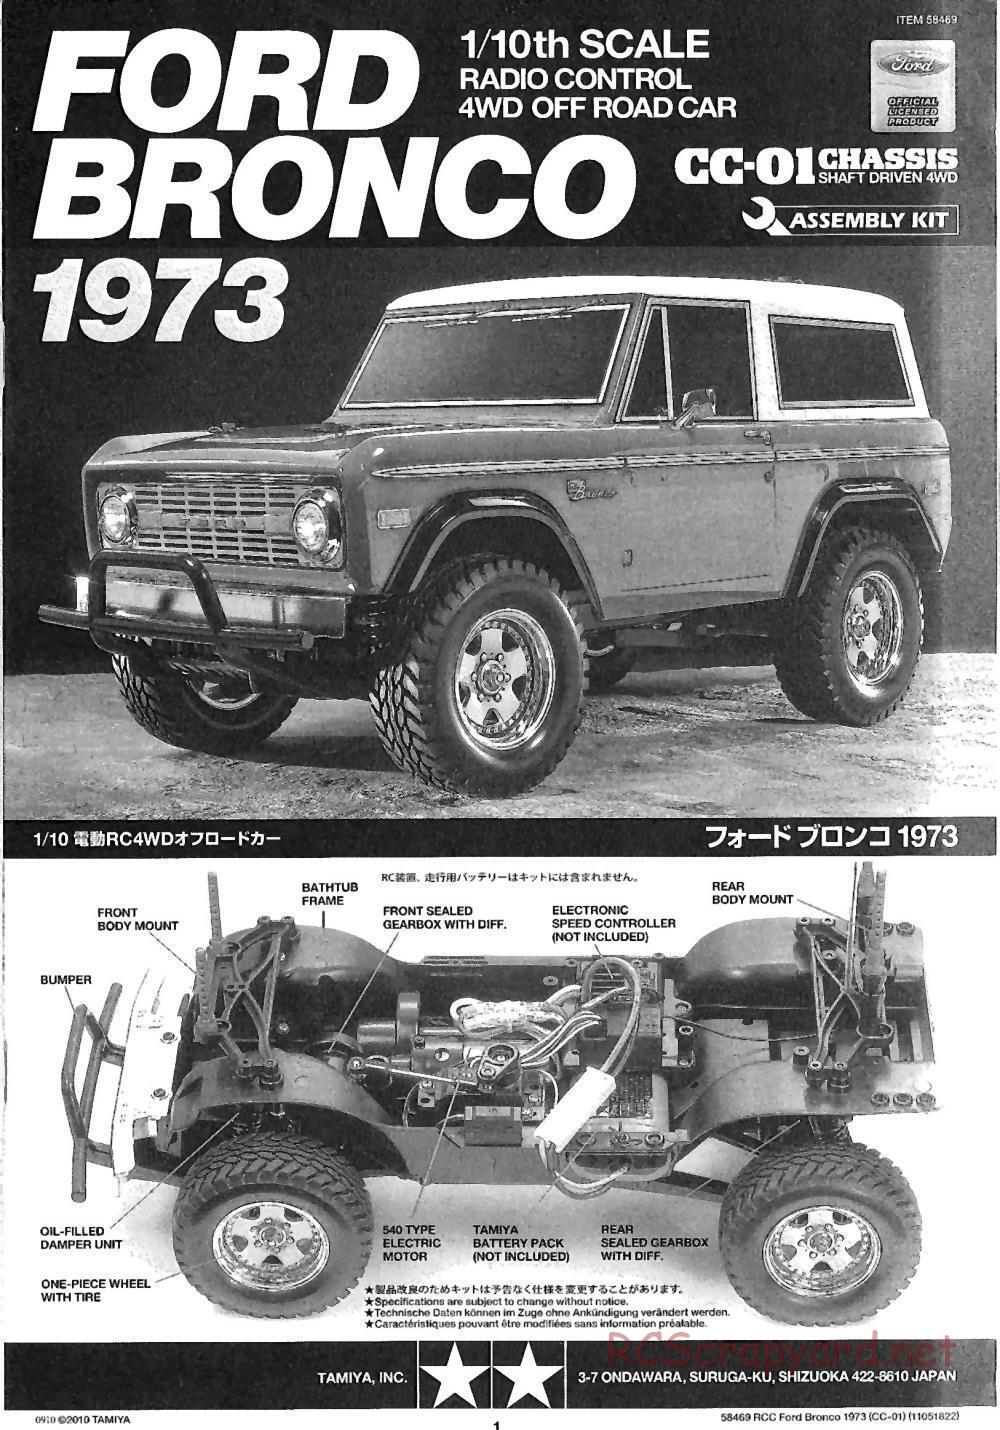 Tamiya - Ford Bronco 1973 - CC-01 Chassis - Manual - Page 1